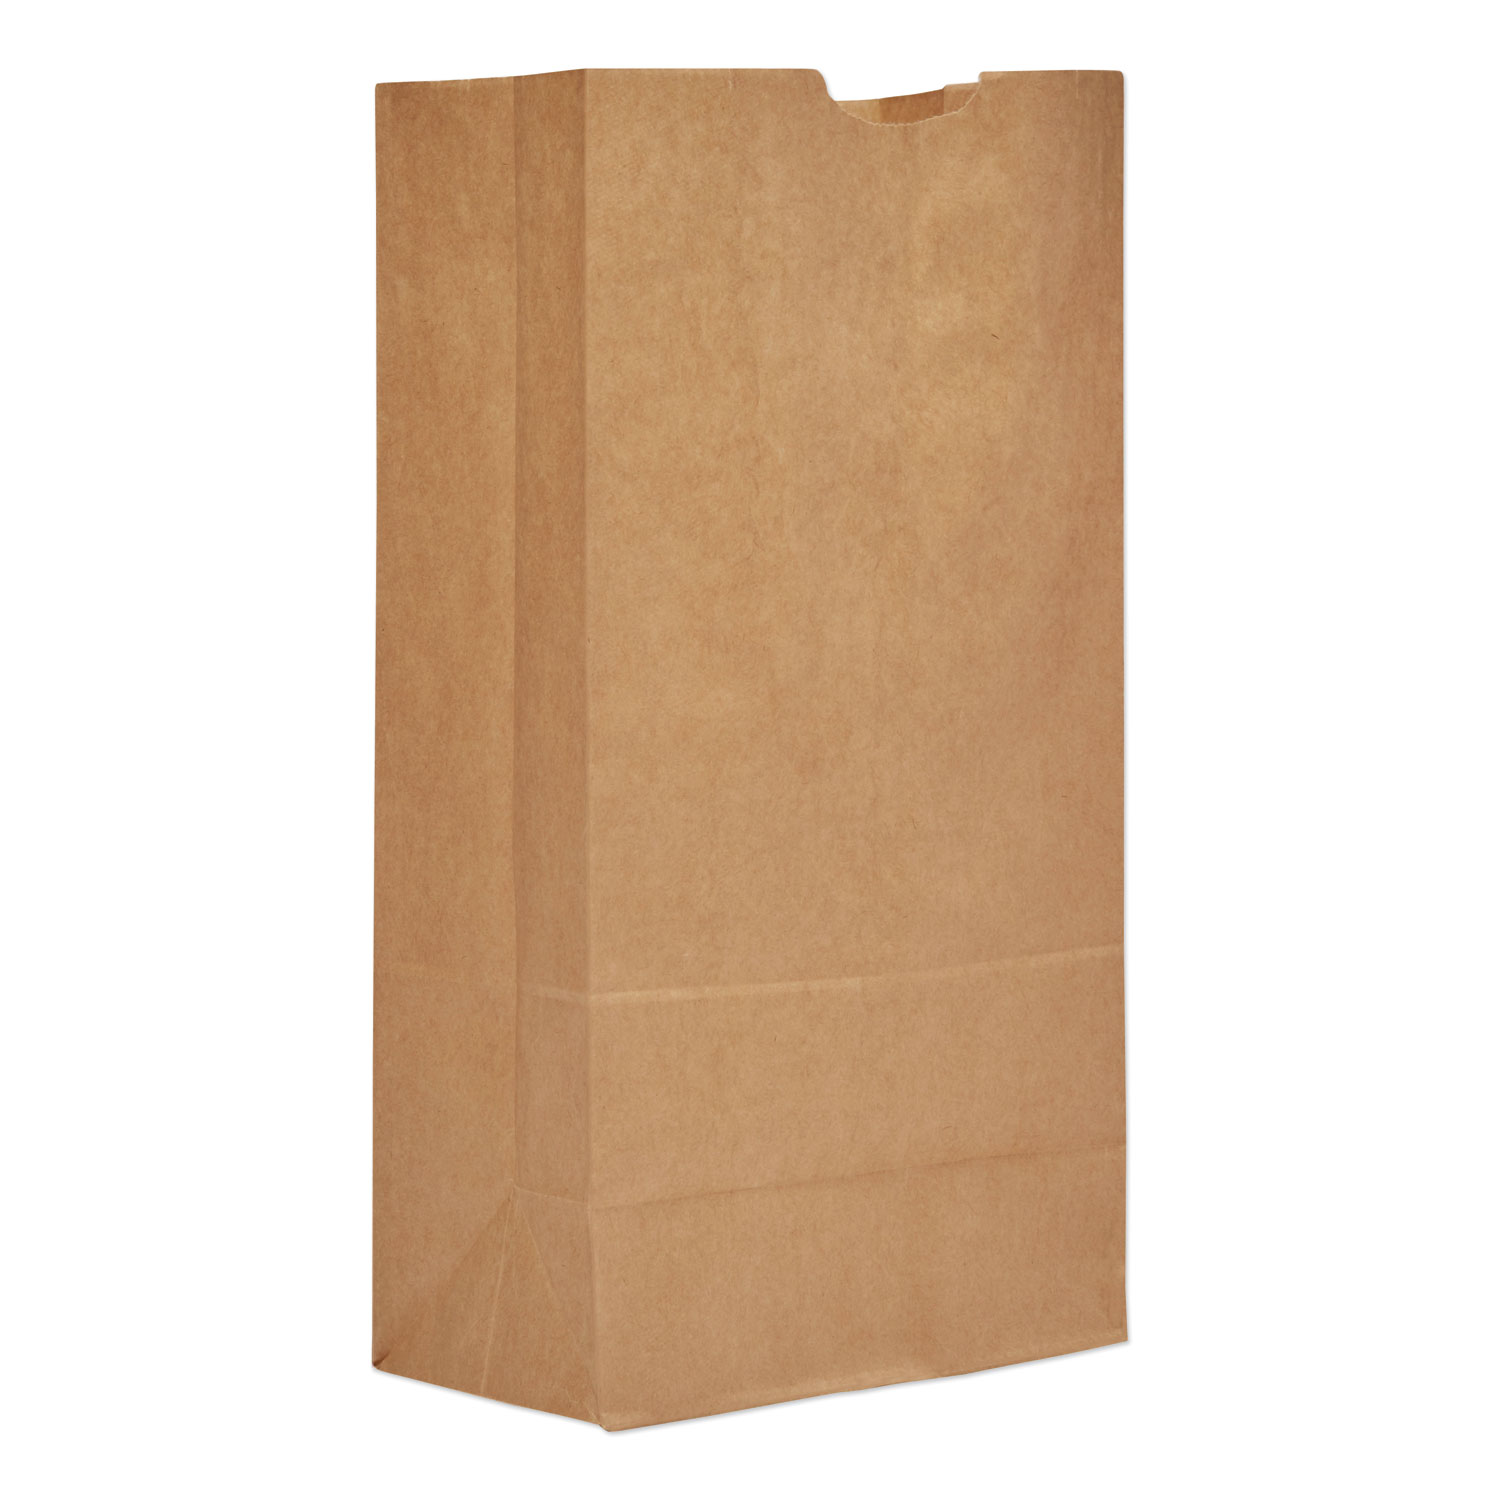  General 29820 Grocery Paper Bags, 50 lbs Capacity, #20, 8.25w x 5.94d x 16.13h, Kraft, 500 Bags (BAGGH20) 